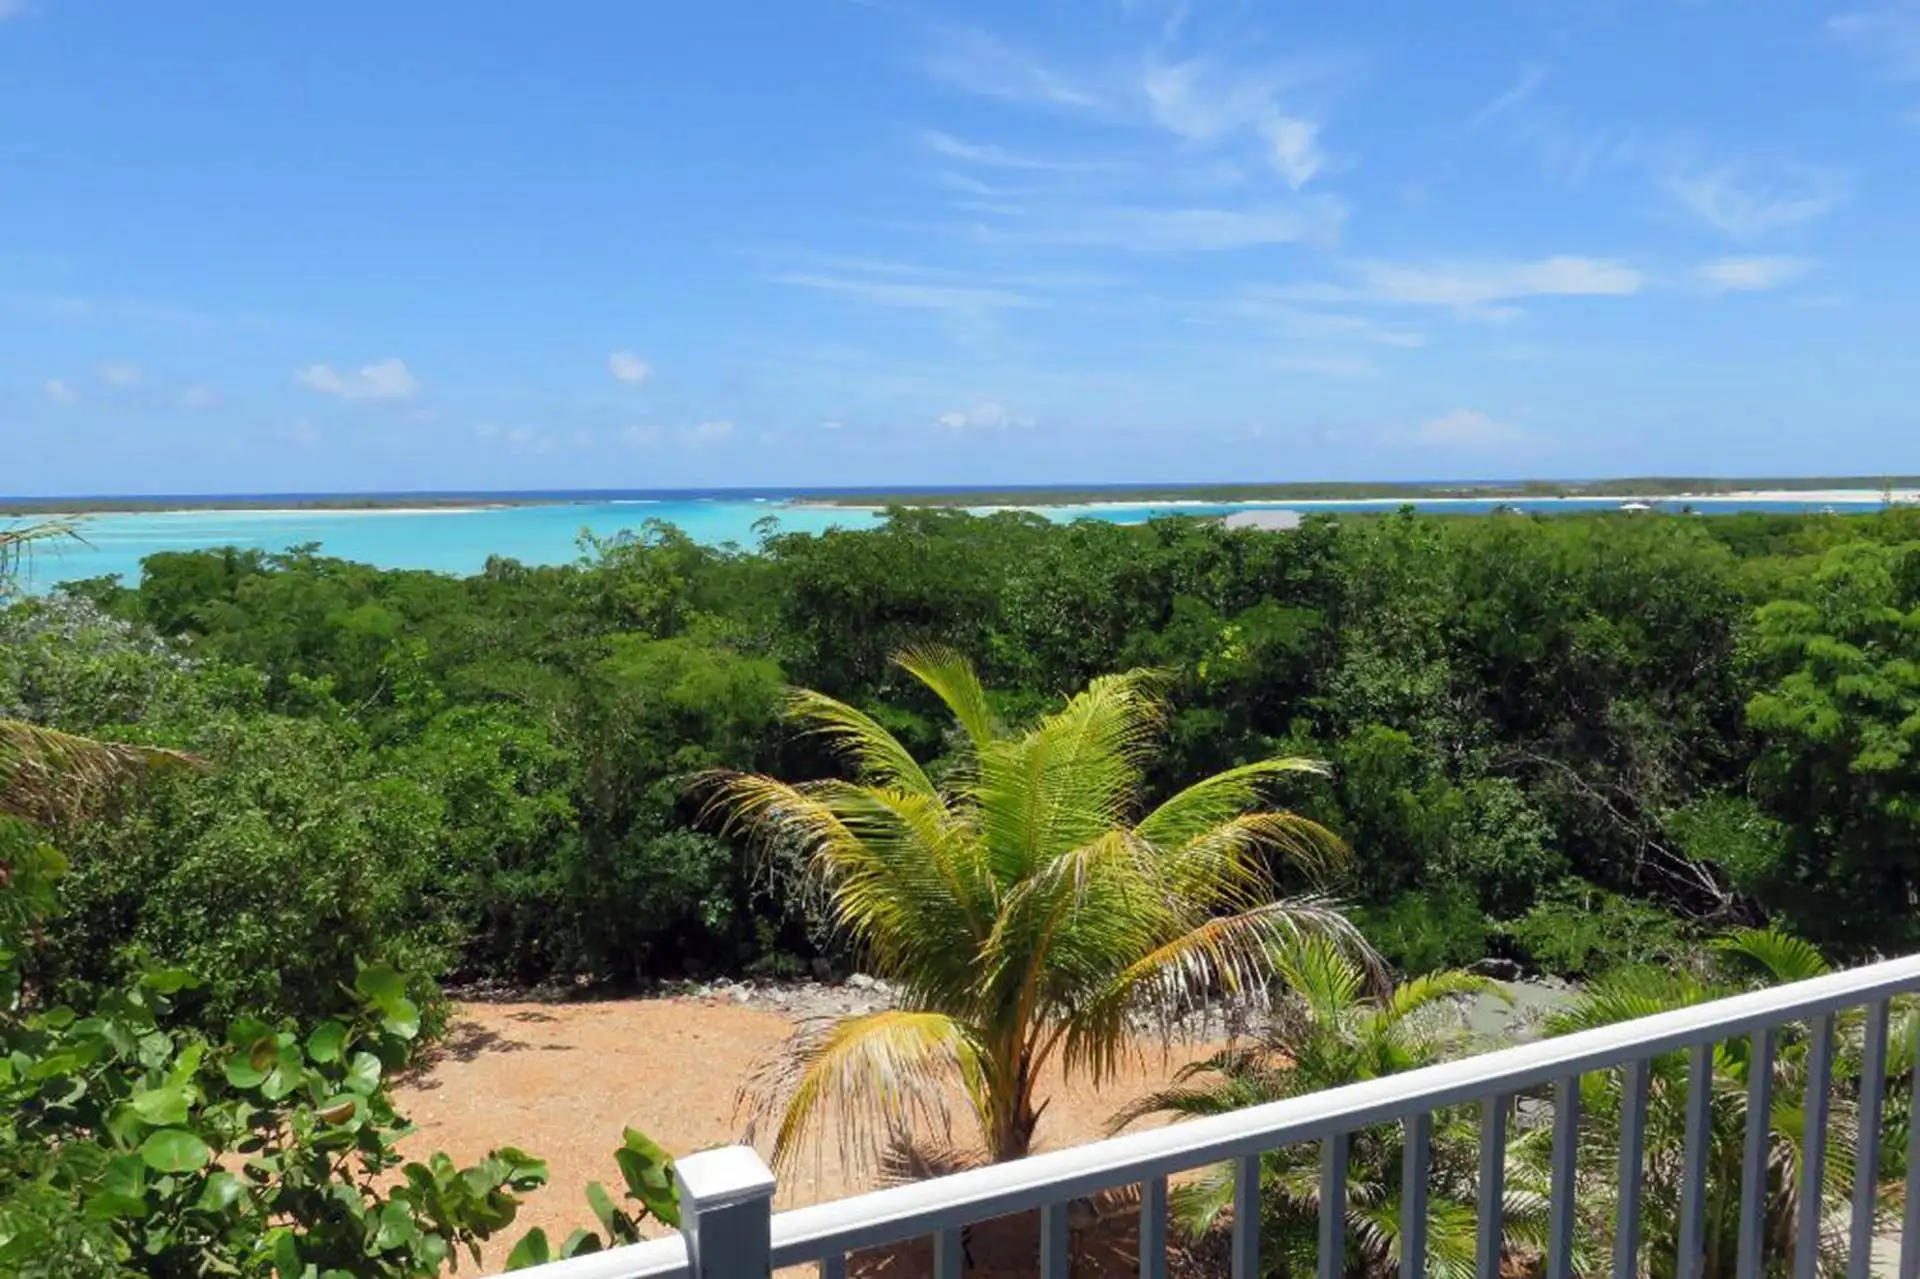 Harbor Breeze Villas in the Bahamas